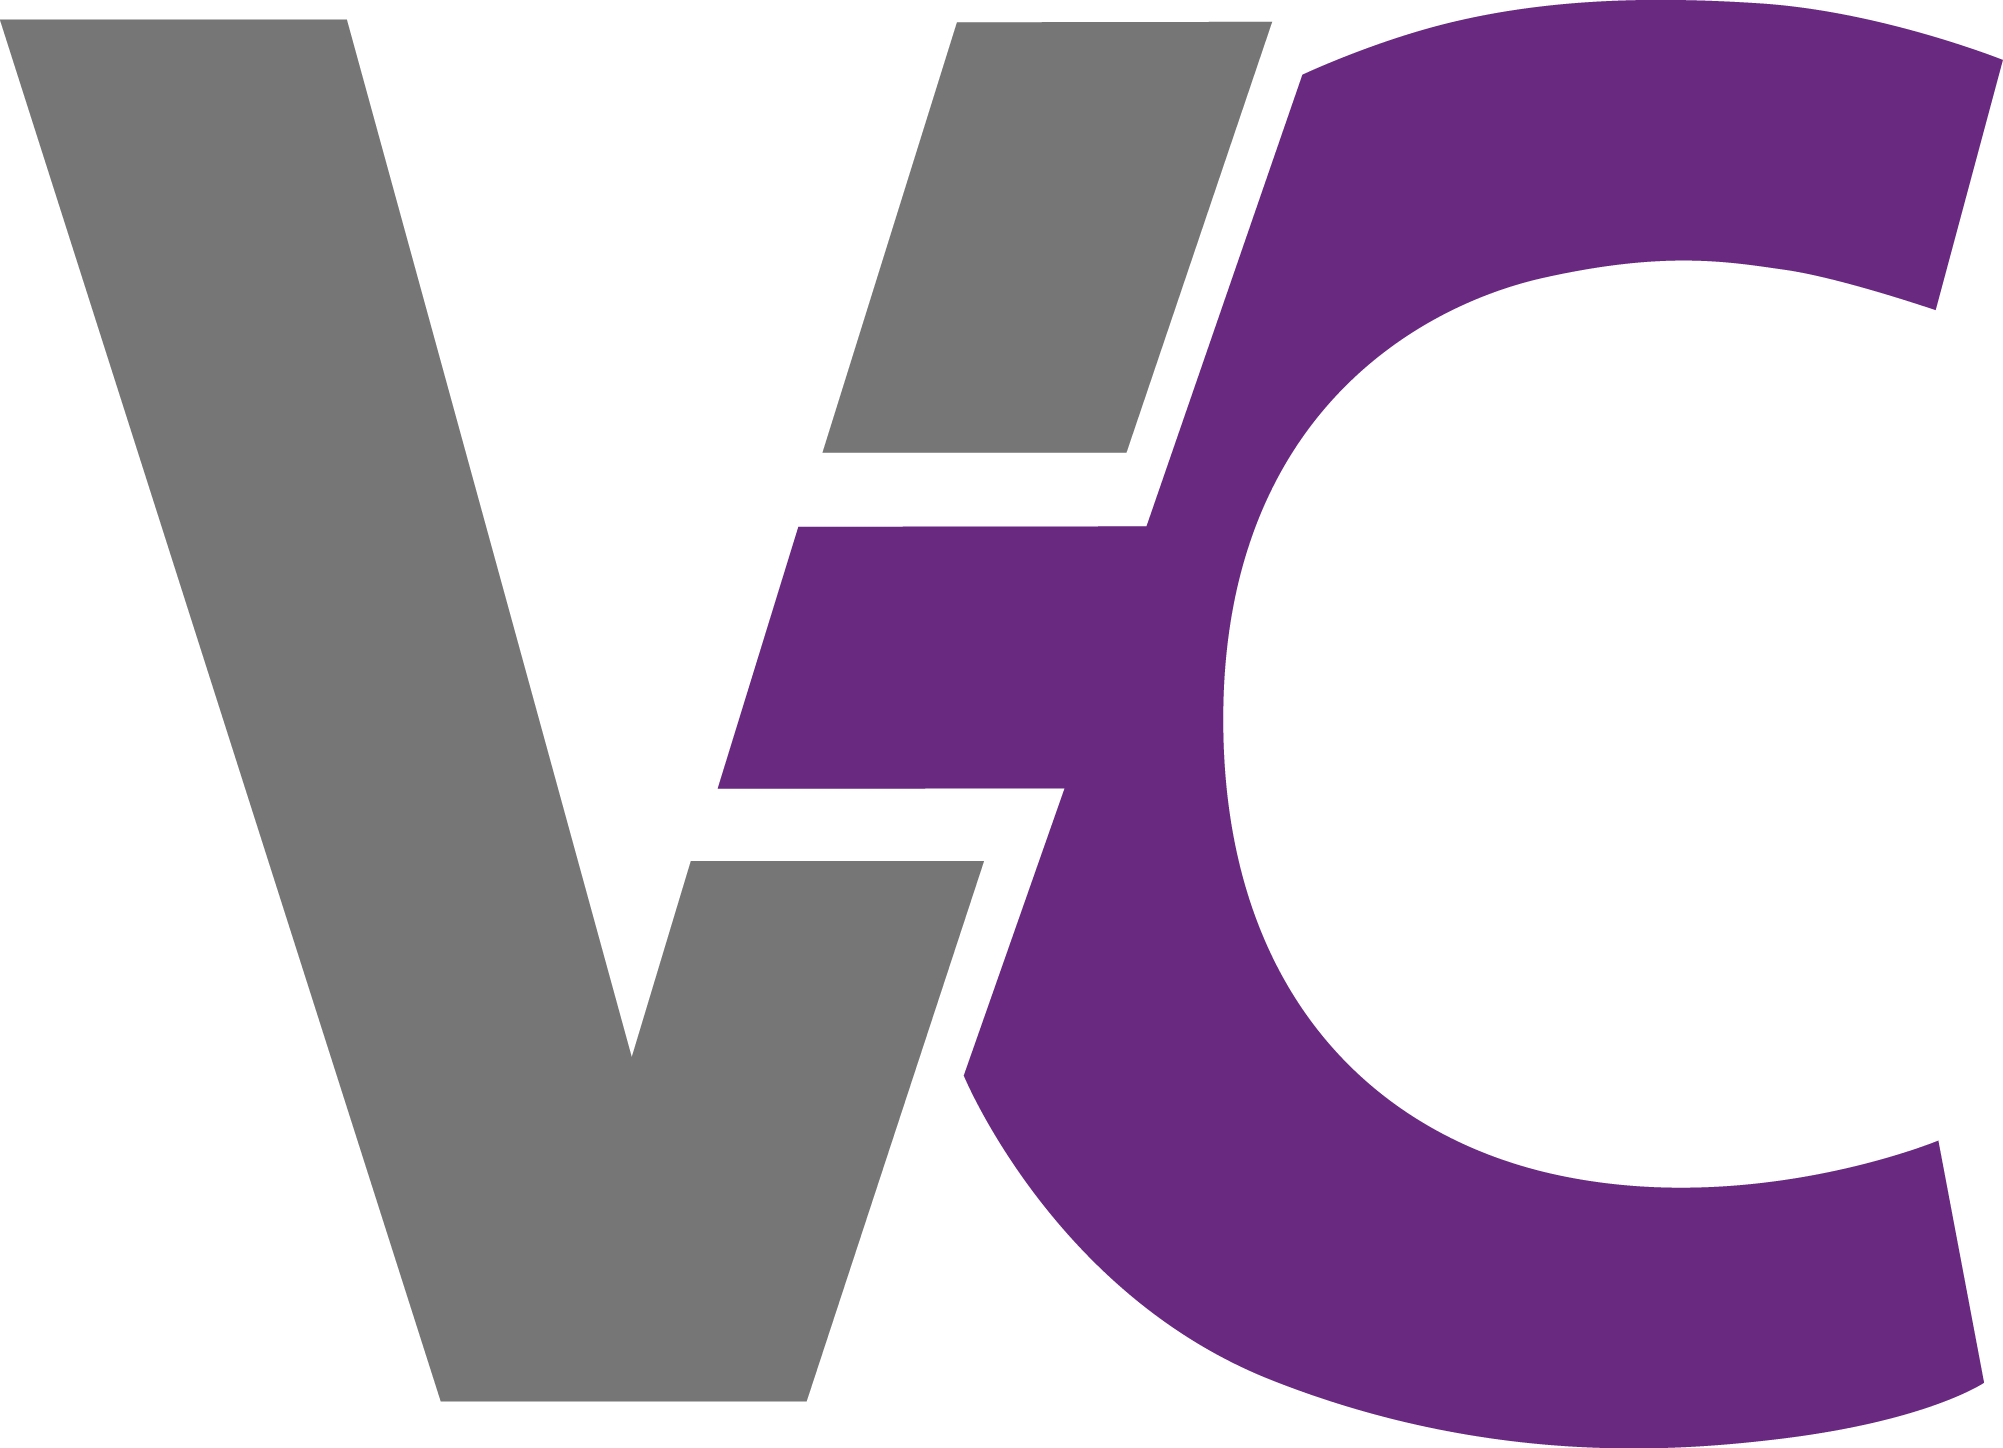 Vc logo png 3 » PNG Image.